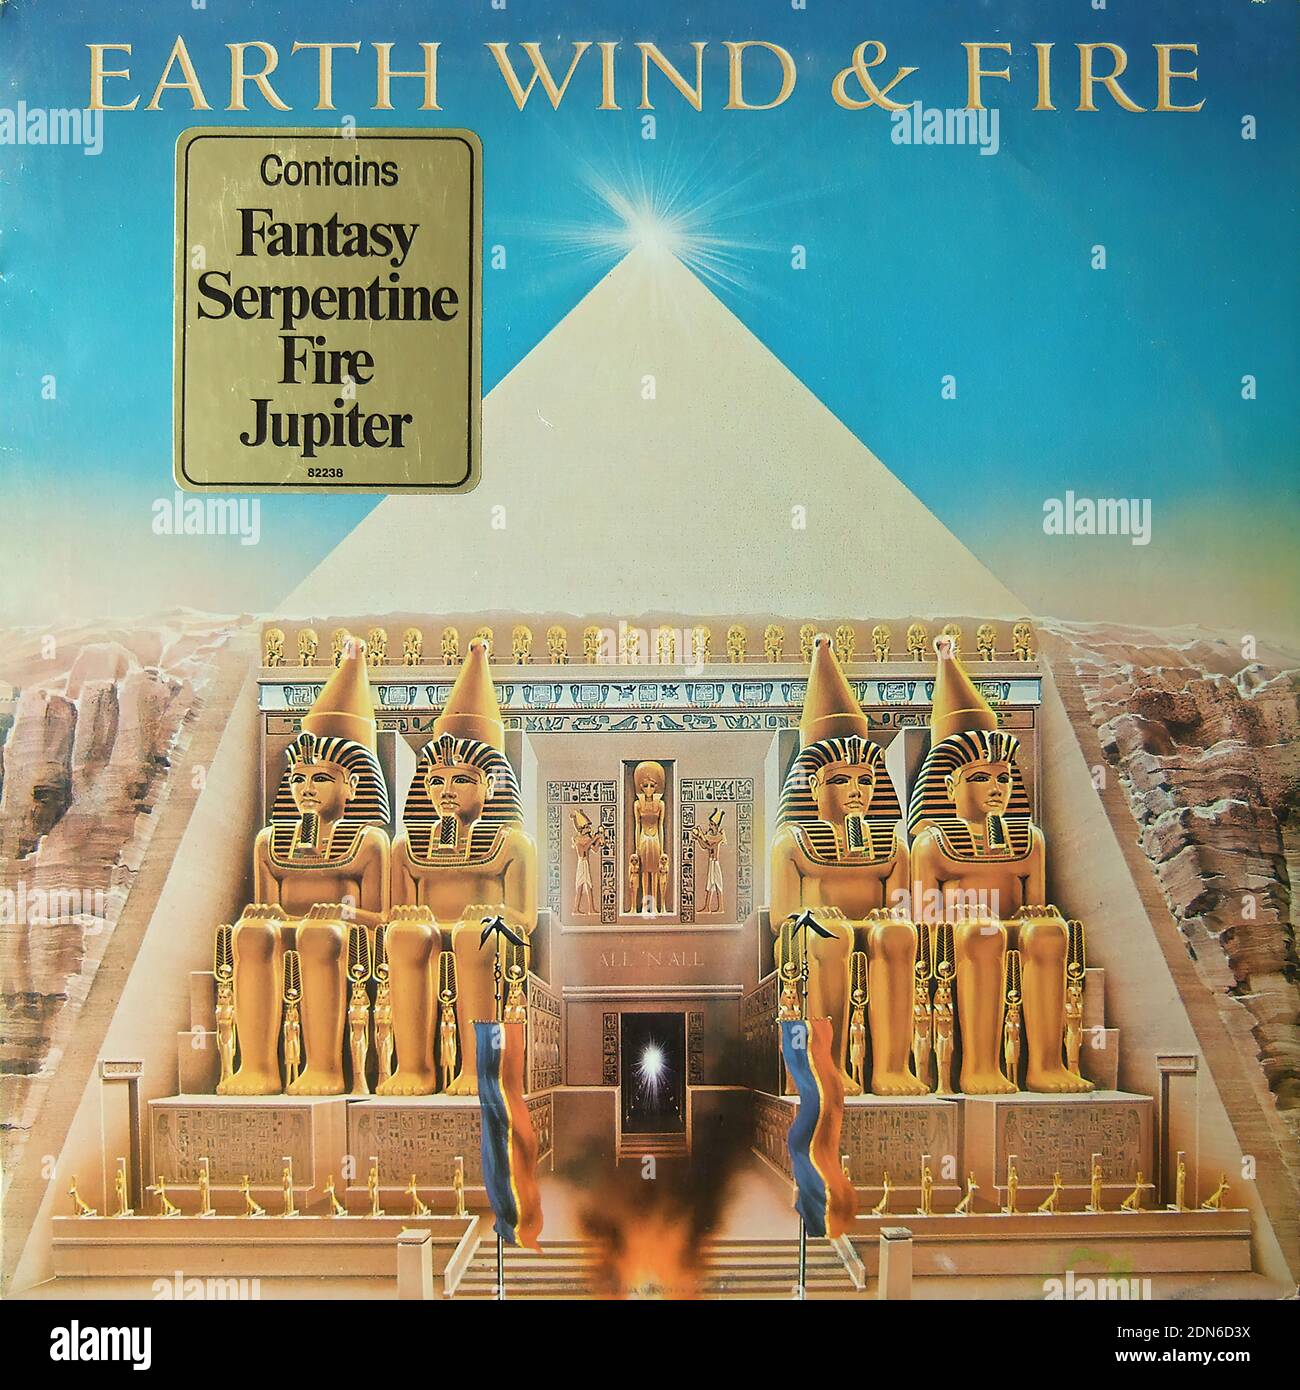 Earth, Wind & Fire - Fantasy, Serpentine, Fire, Jupiter - Vintage vinyl album cover Stock Photo